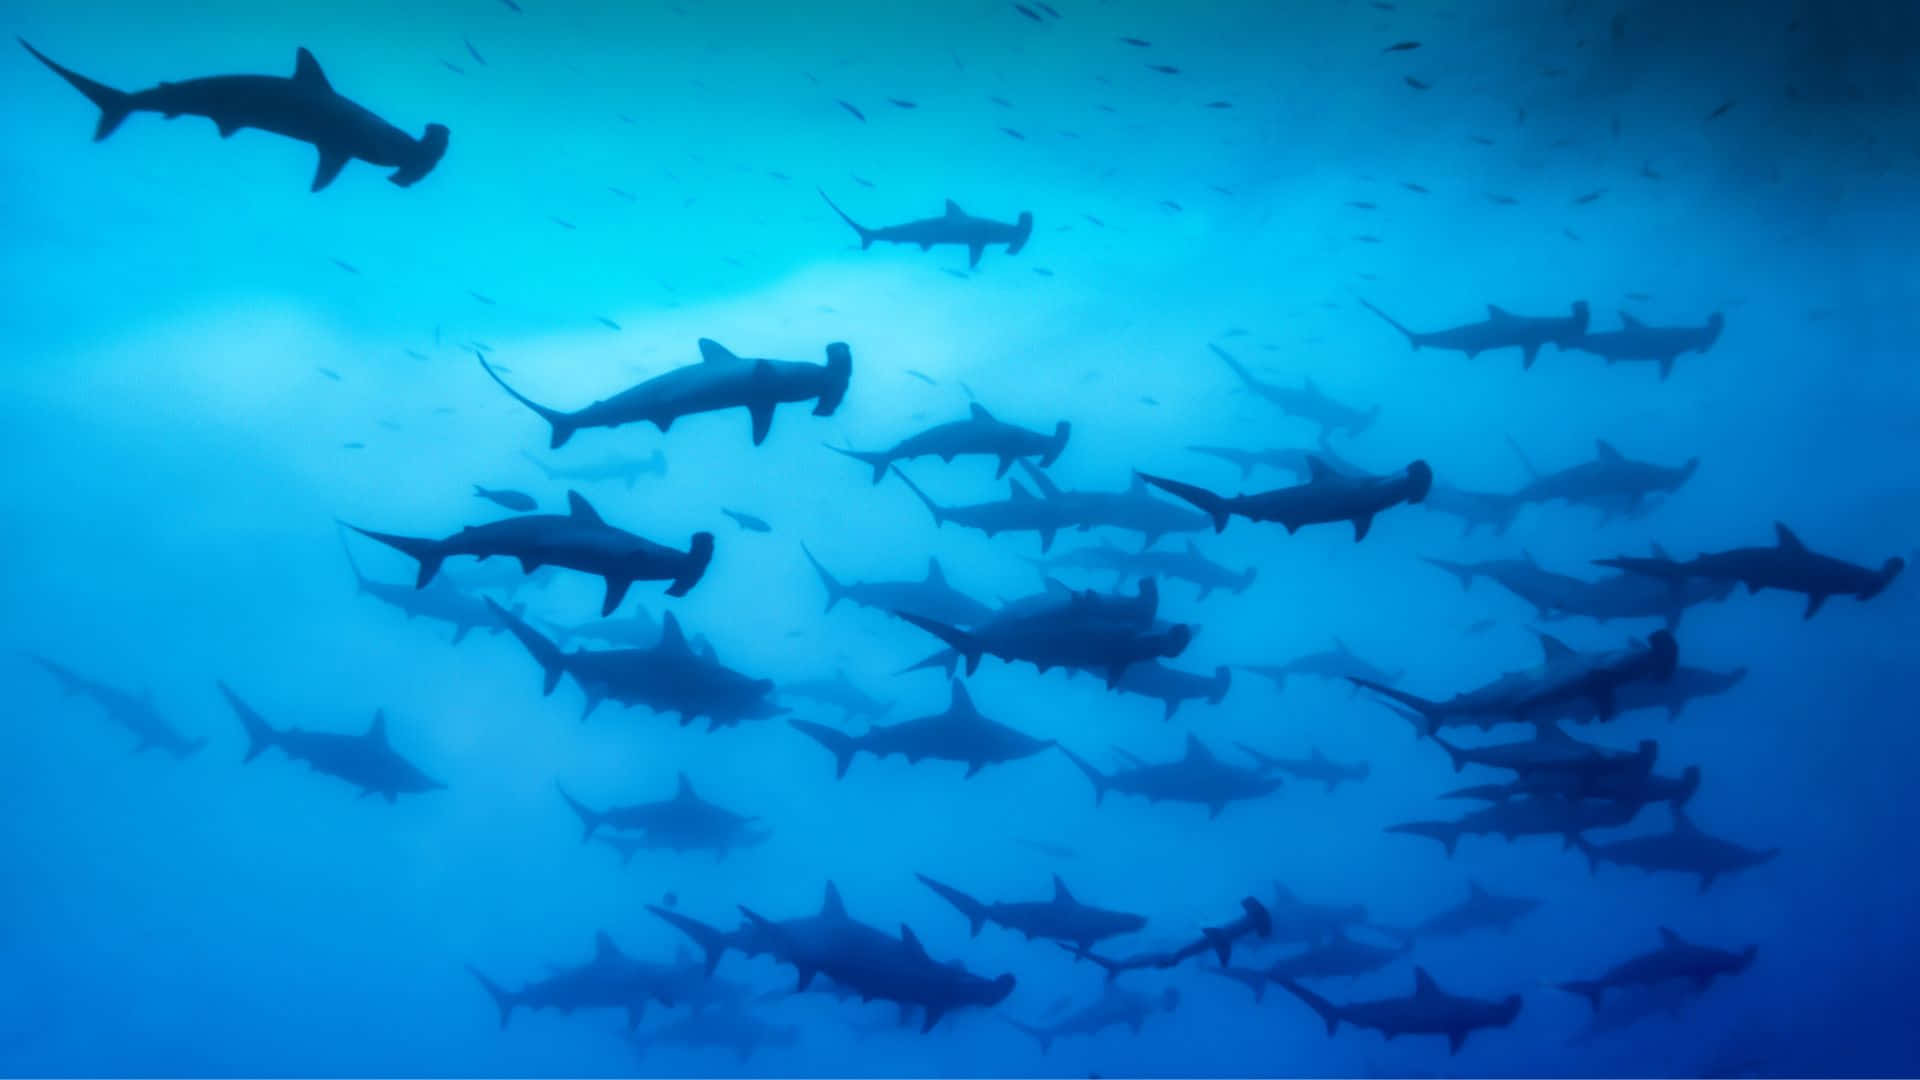 Caption: The Majestic Black Shark In Deep Sea Exploration Background